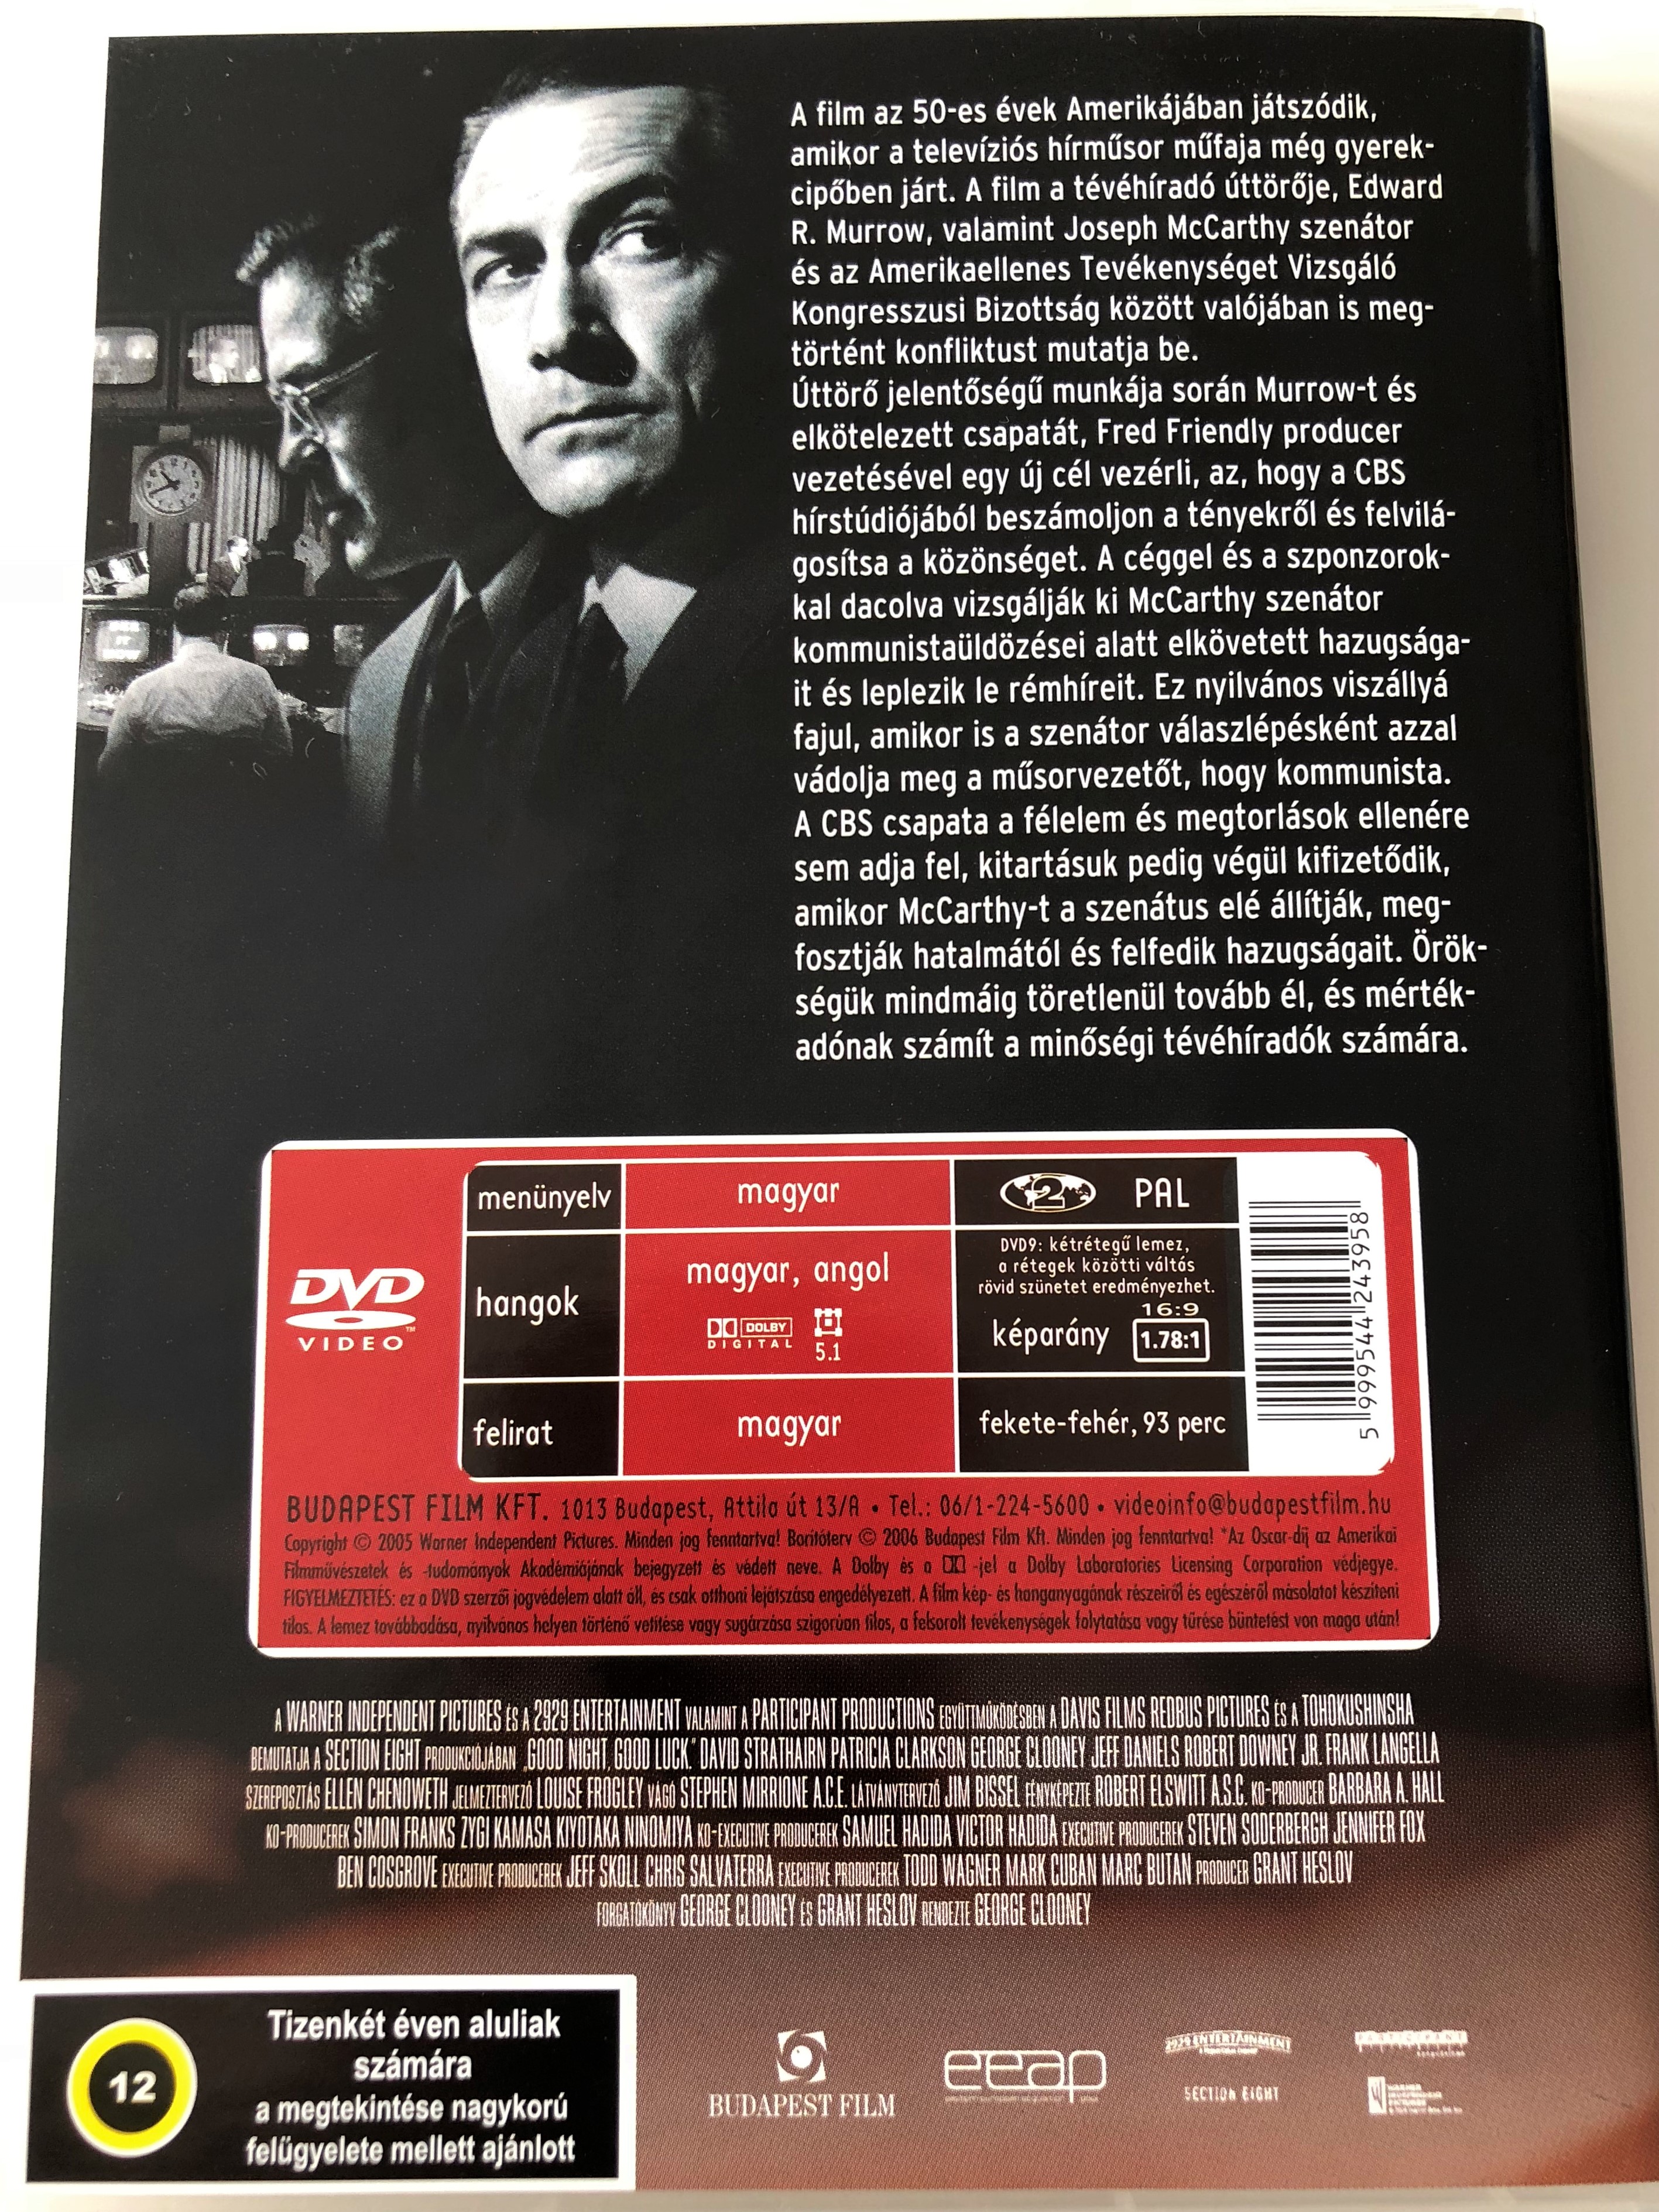 good-night-and-good-luck-dvd-2005-directed-by-george-clooney-starring-david-strathairn-patricia-clarkson-george-clooney-jeff-daniels-robert-downey-jr.-frank-langella-historical-drama-film-2-.jpg